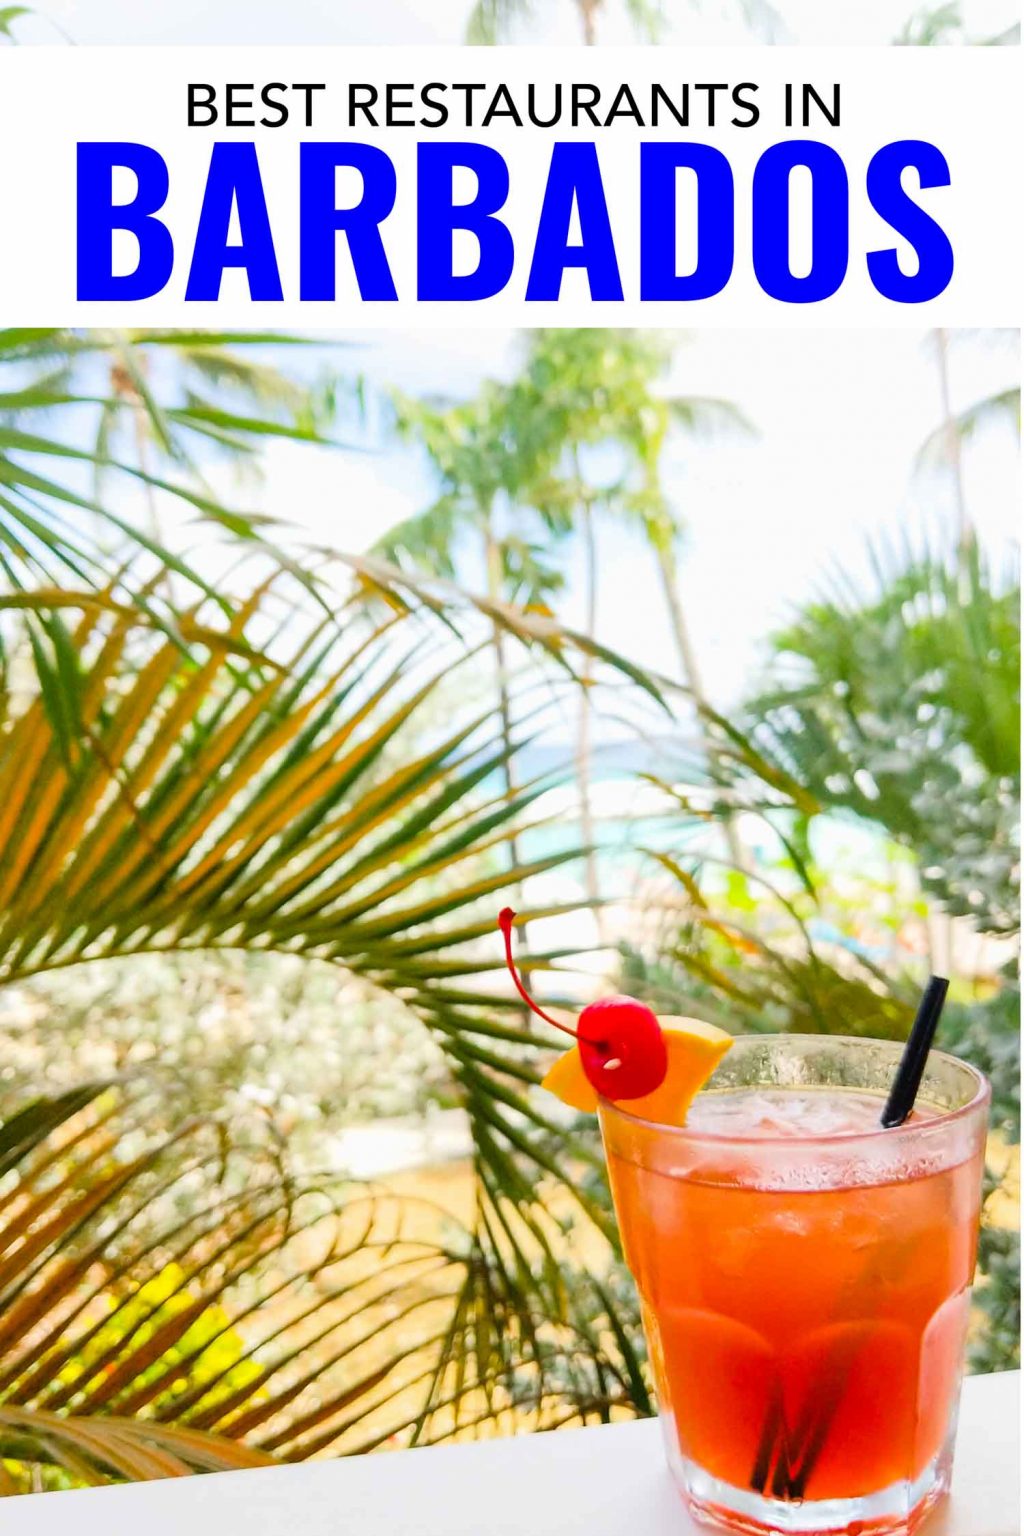 13 Best Barbados Restaurants In 2020 According To Locals 